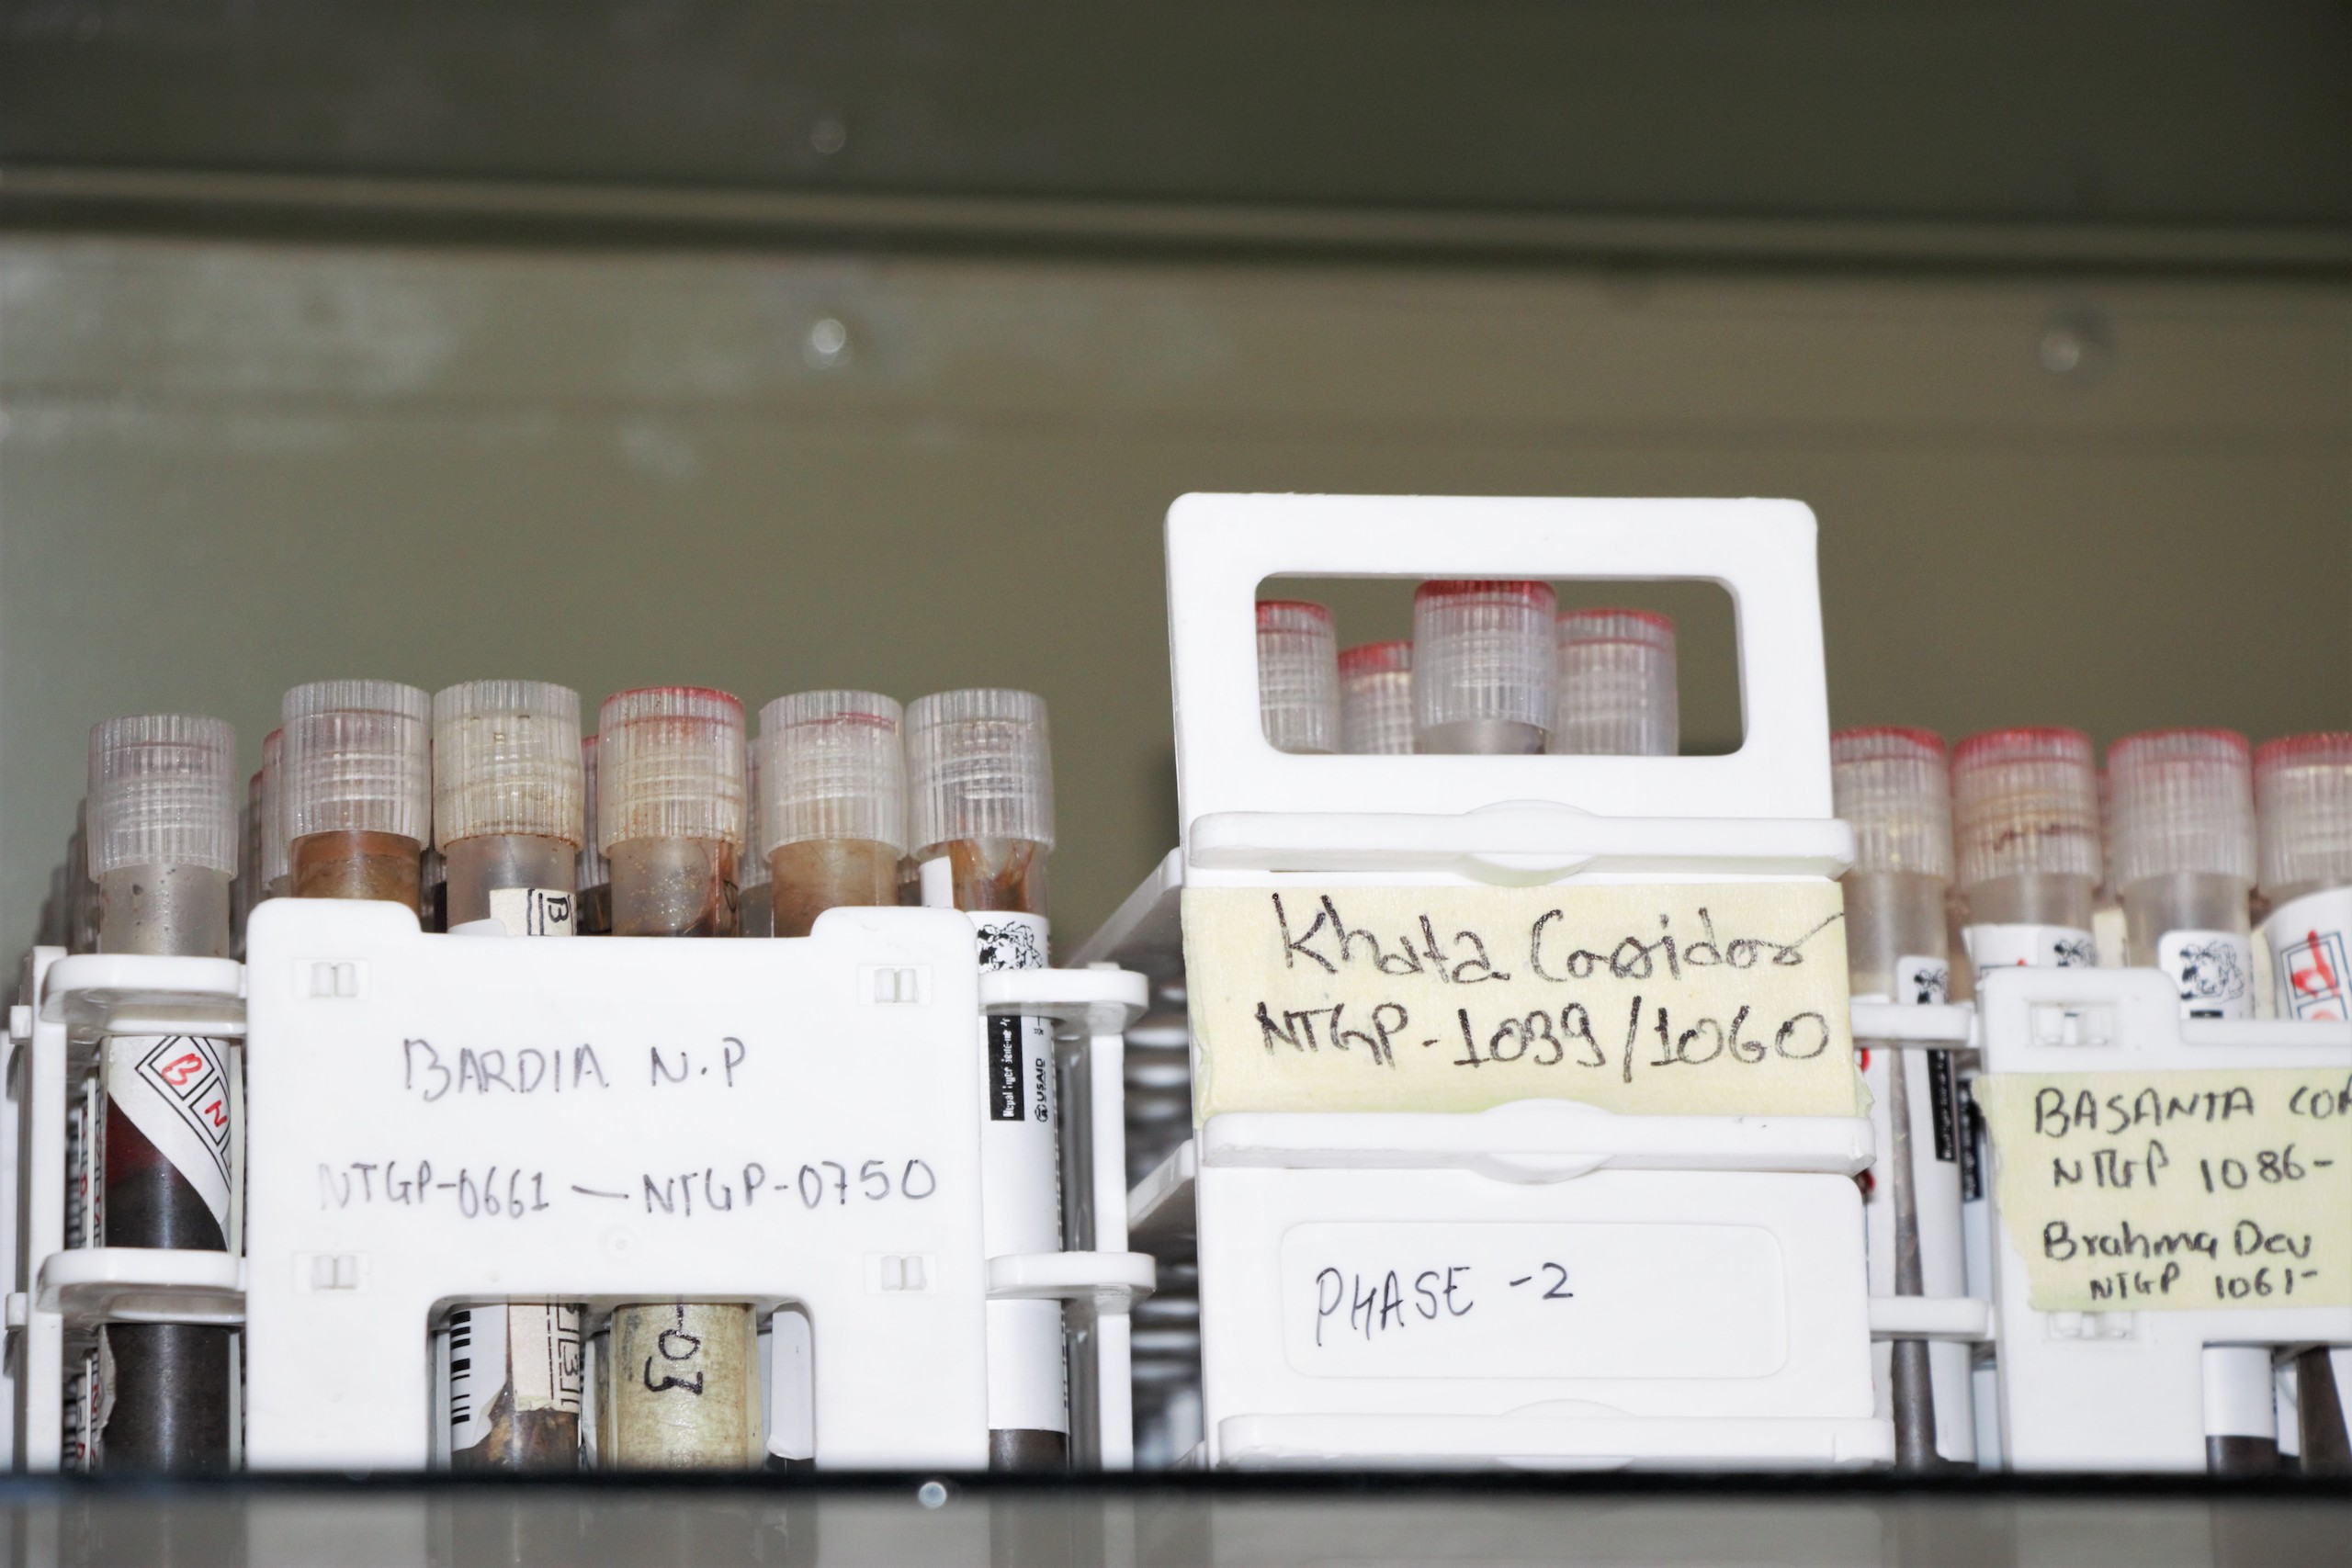 Tiger DNA sample in the wildlife forensics laboratory in Kathmandu